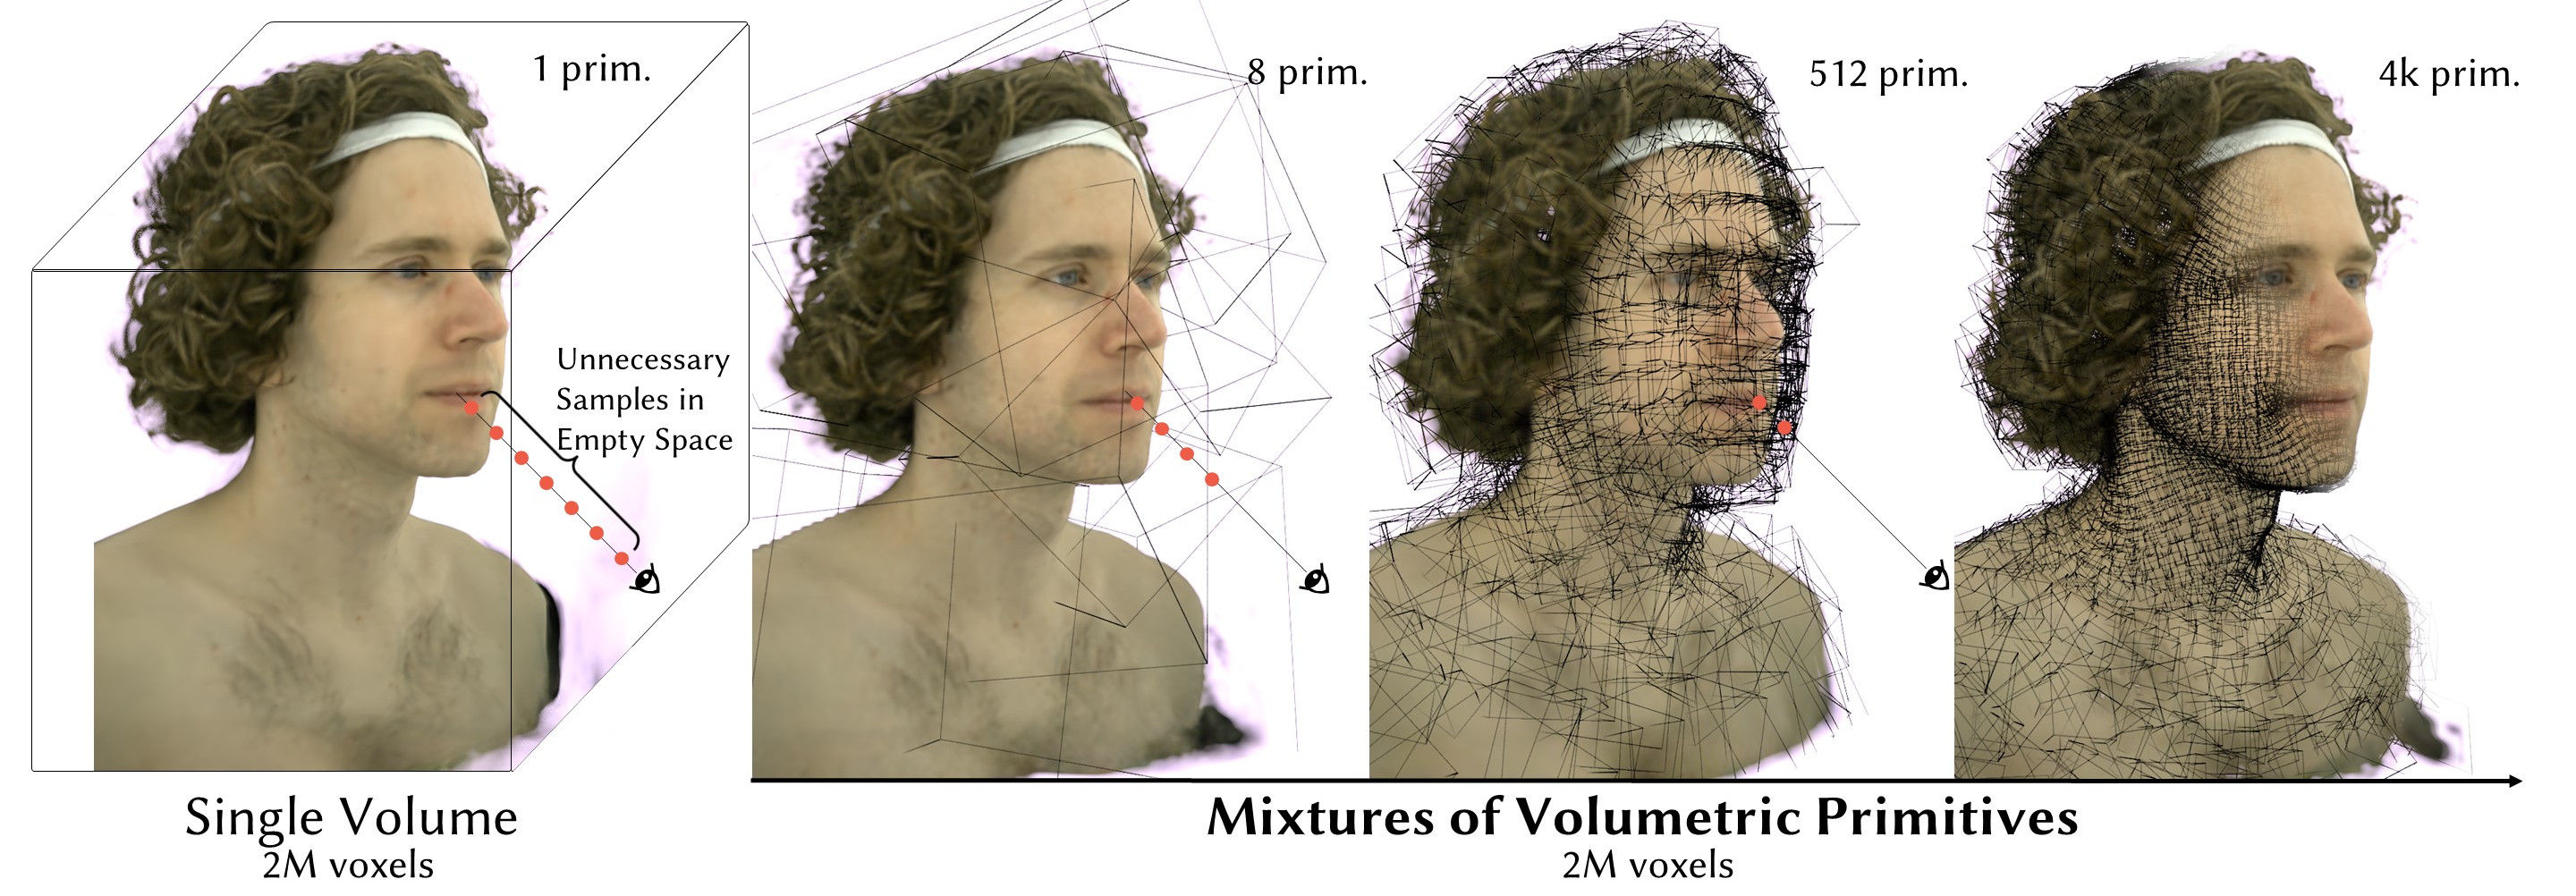 Mixture of Volumetric Primitives